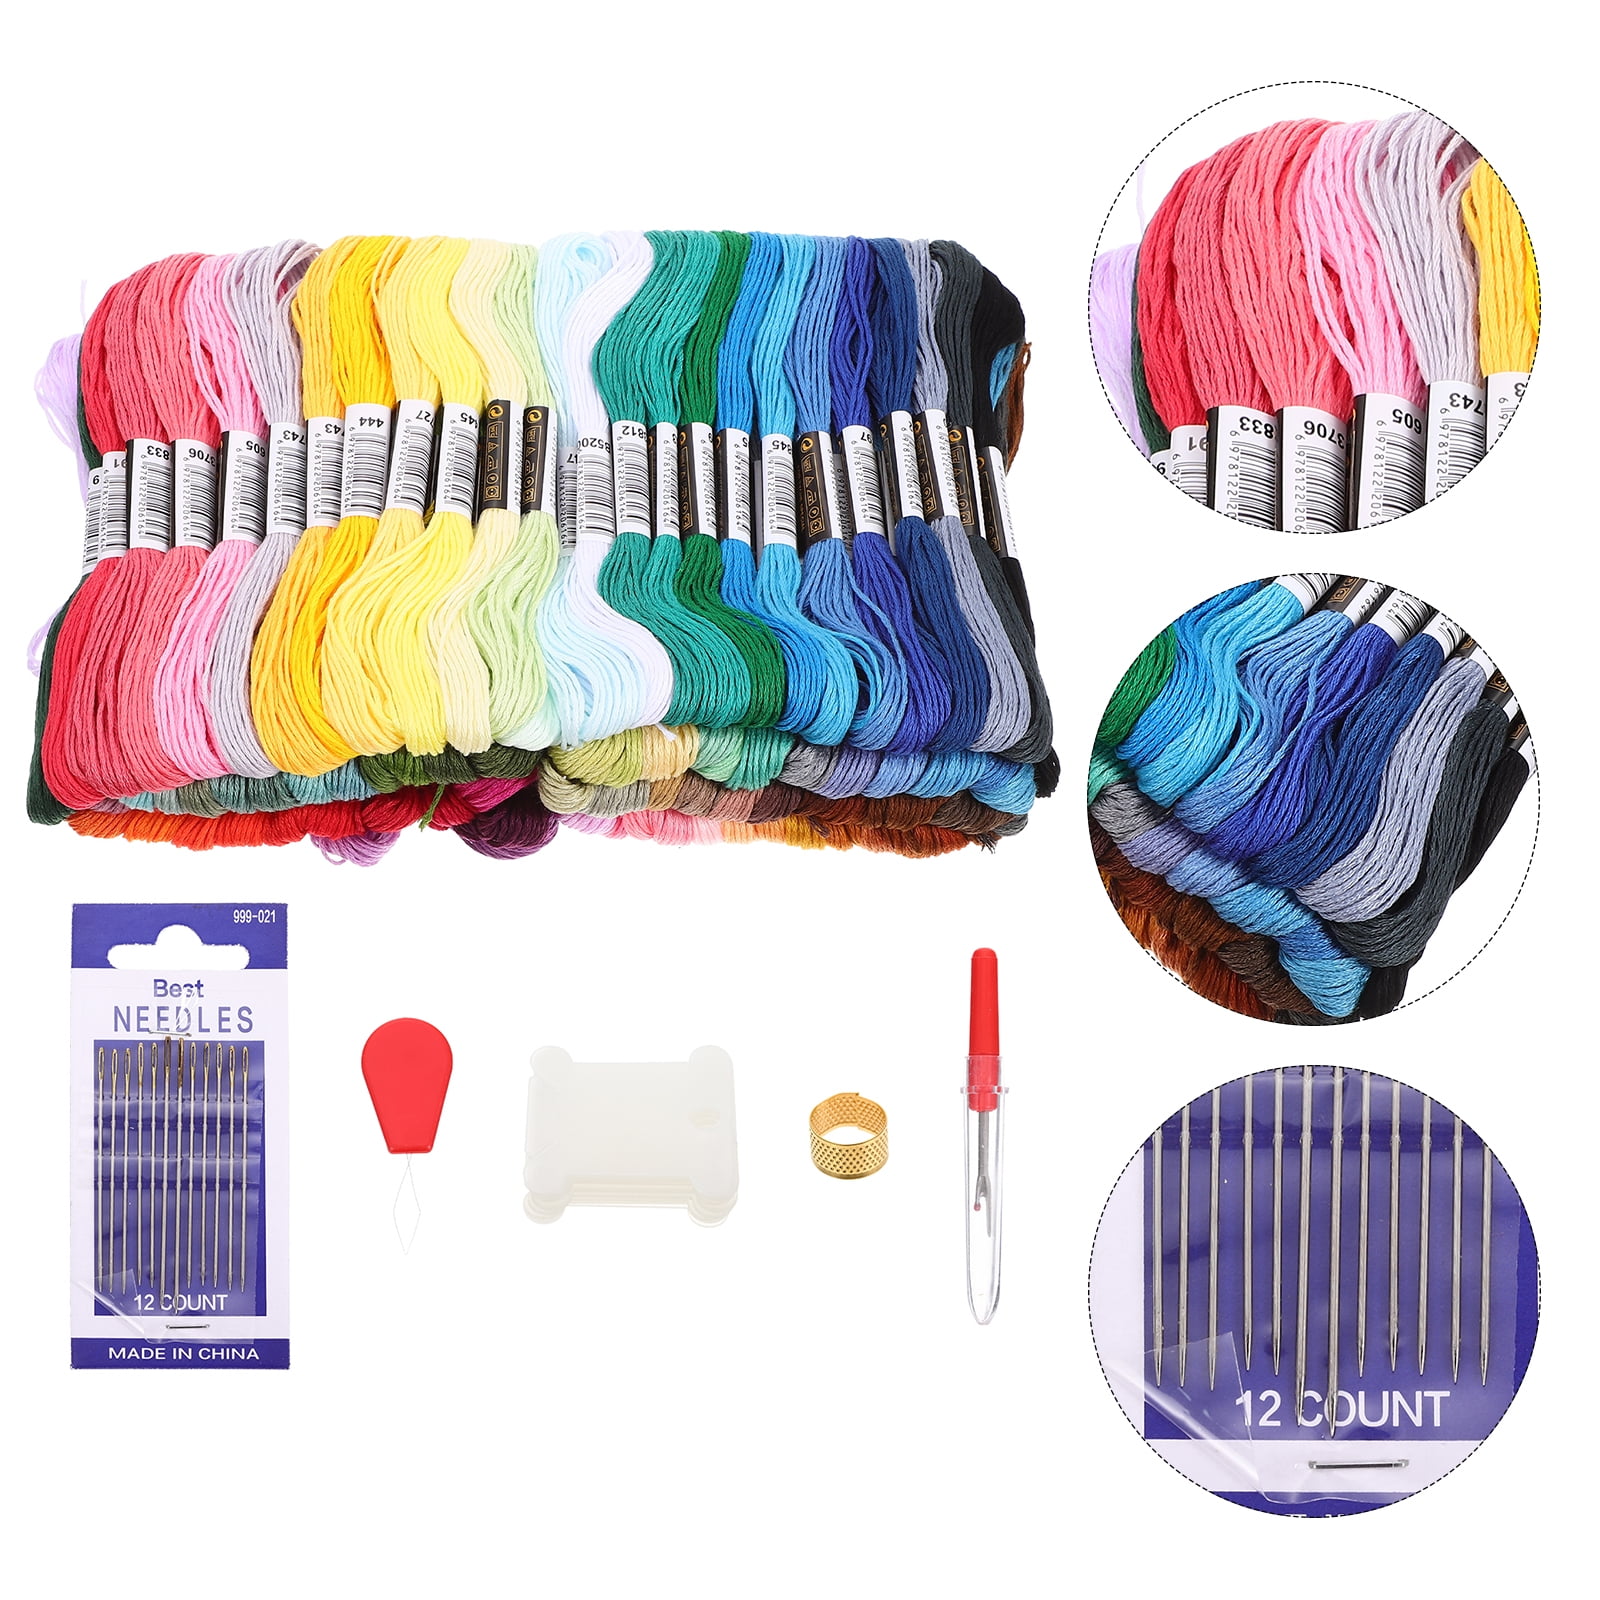 YITOHOP 200pcs+ Embroidery Floss Cross Stitch Threads,Bracelet String Kit with Organizer Storage Box-Included 100pcs Friendship